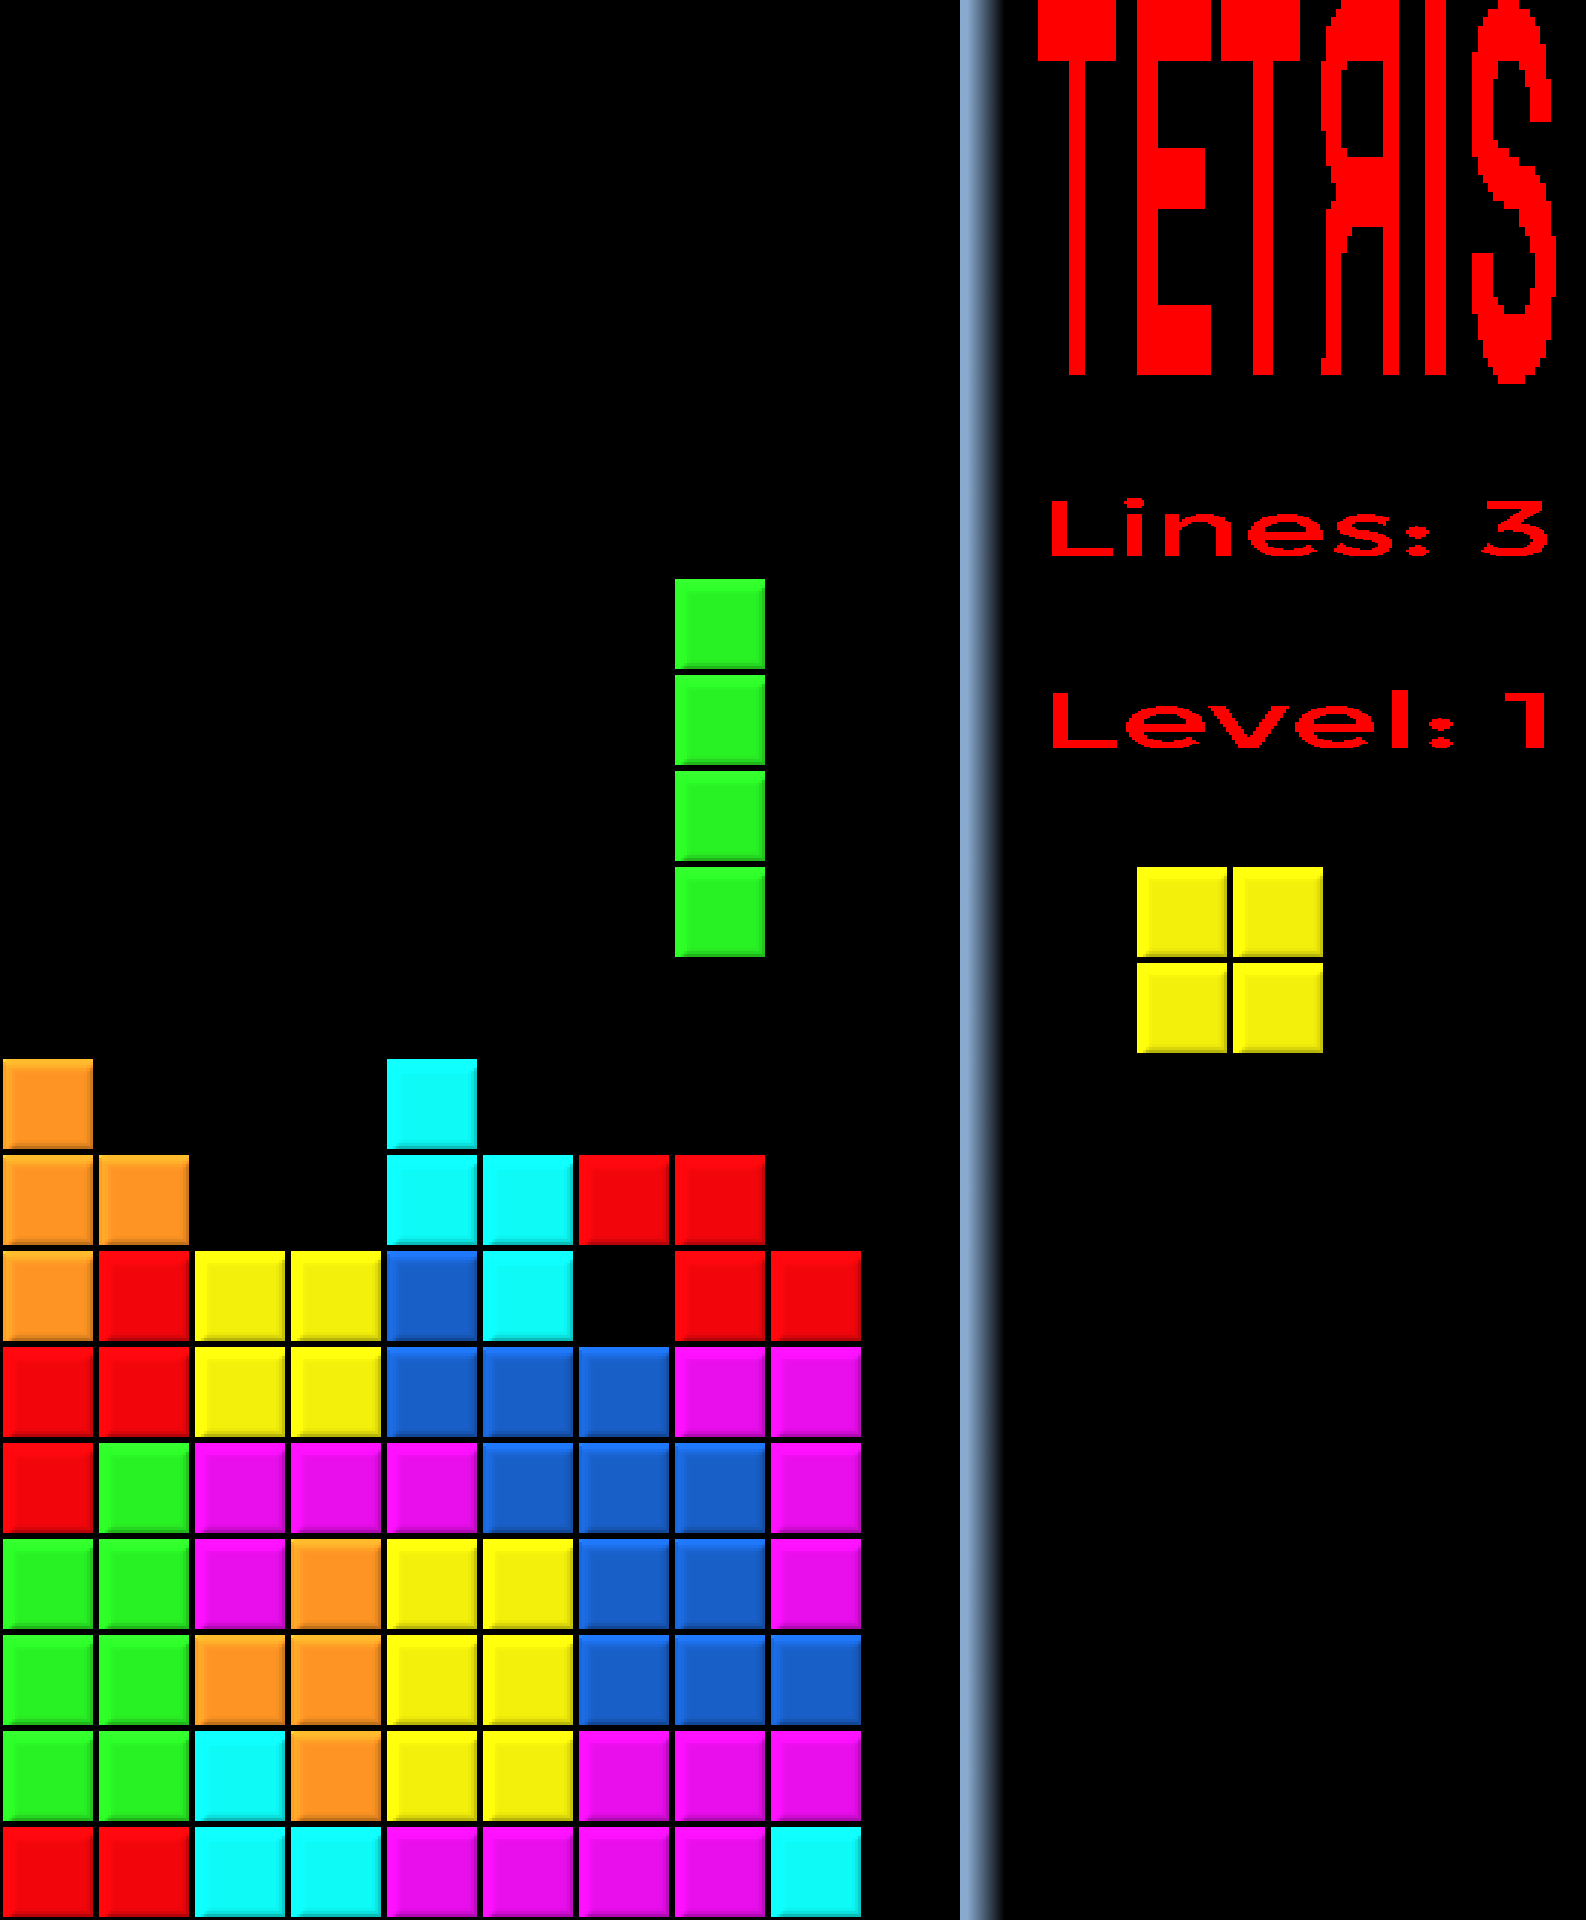 Tetris gameplay